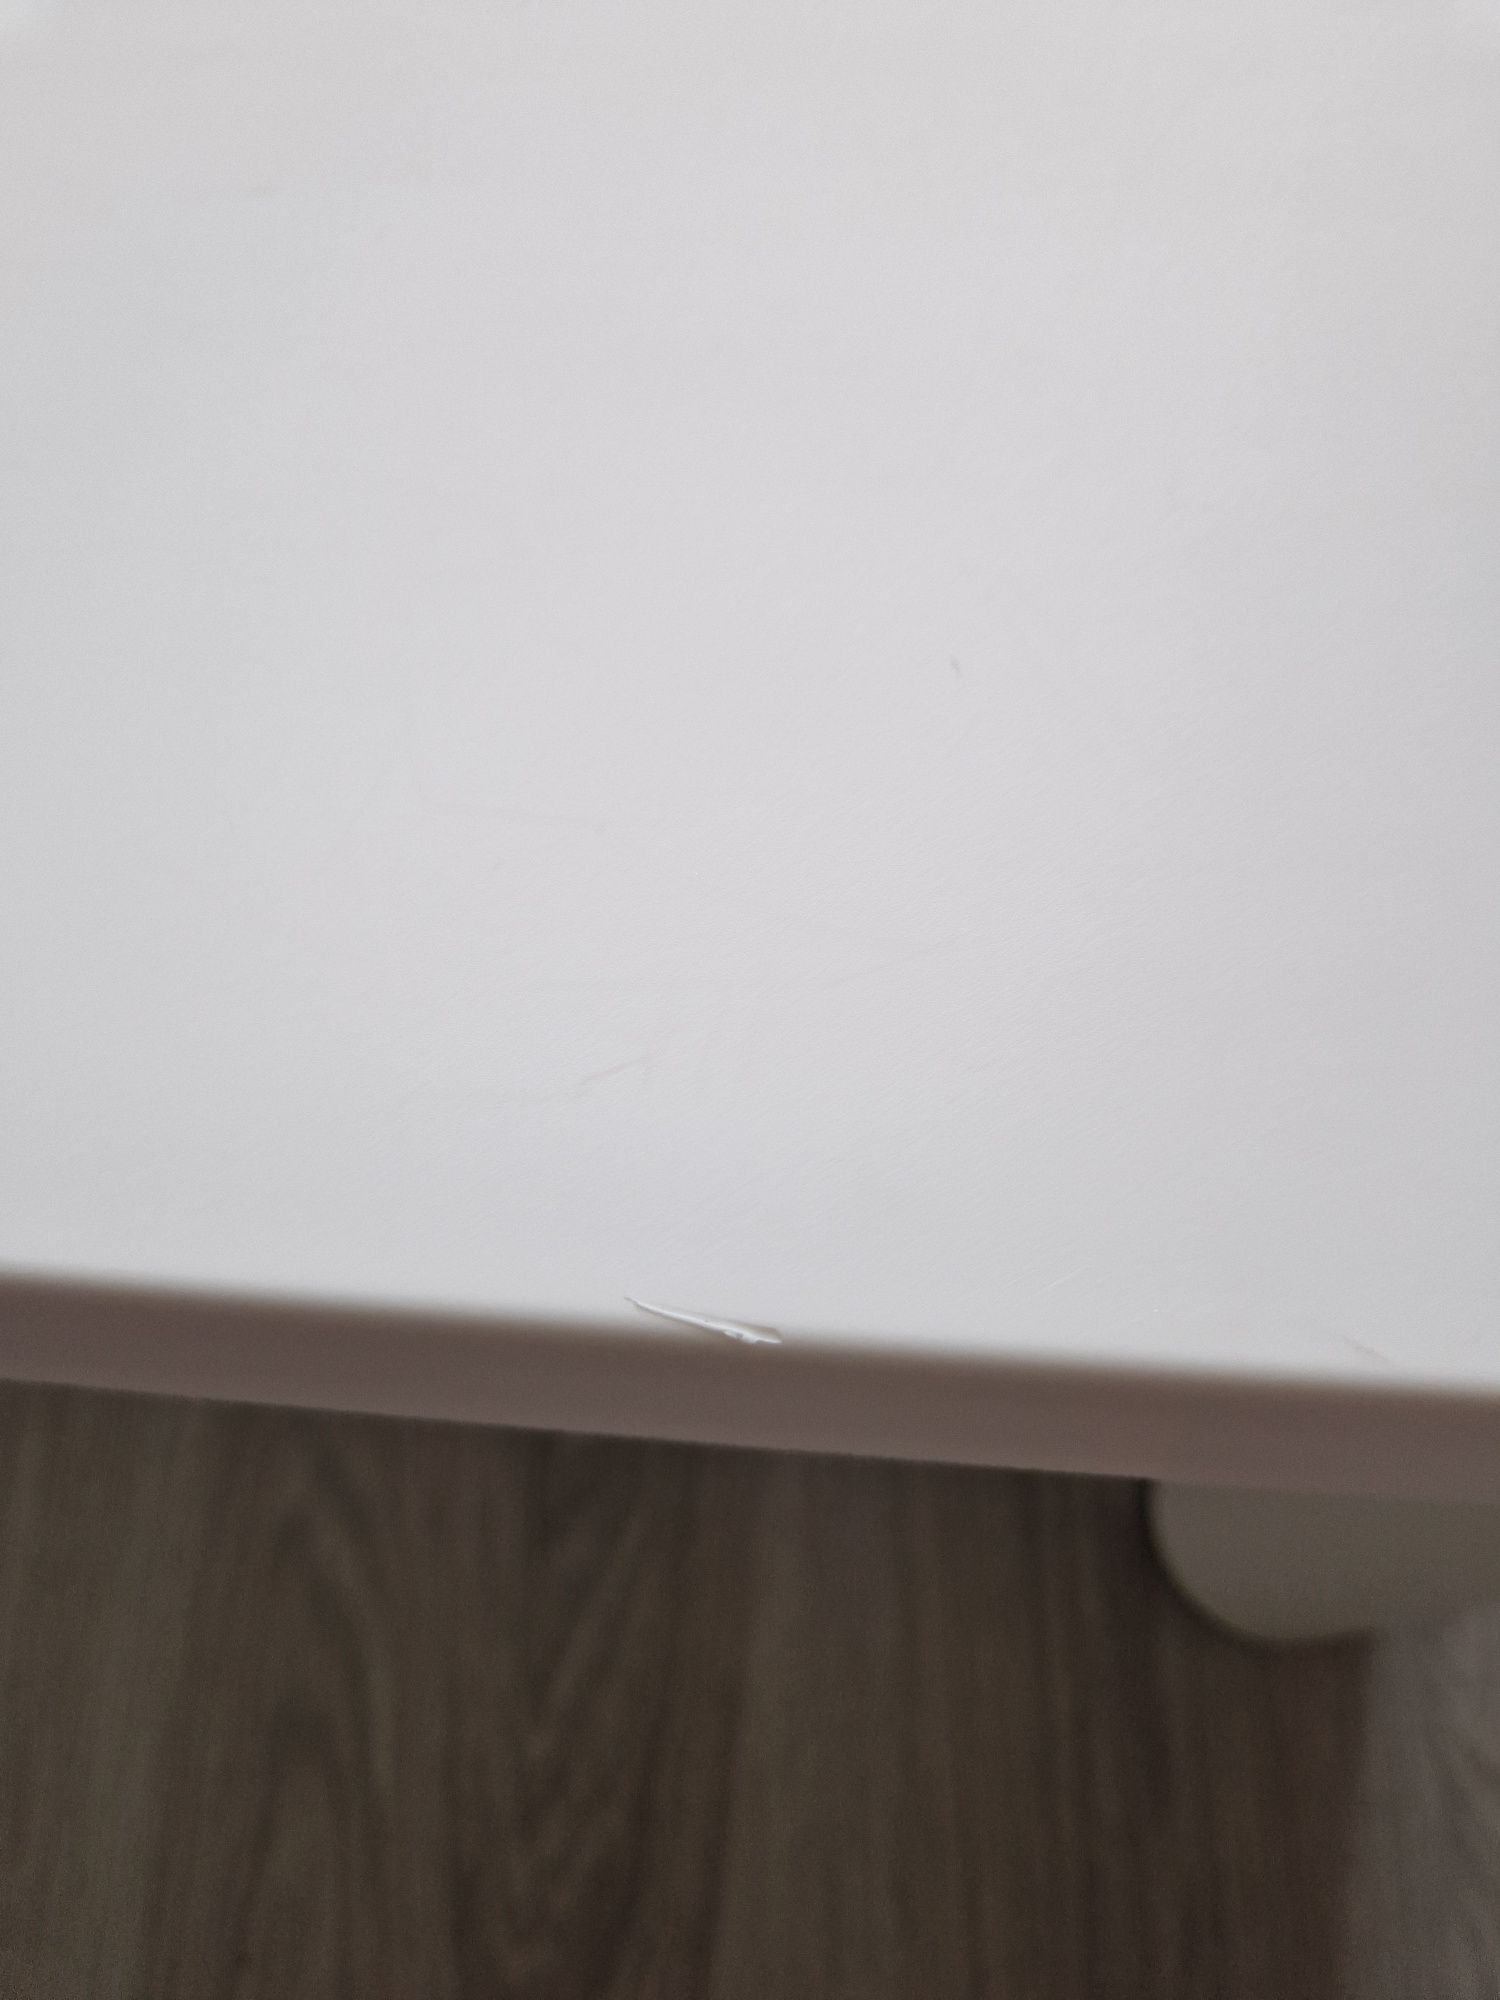 Biały stolik Mammut Ikea